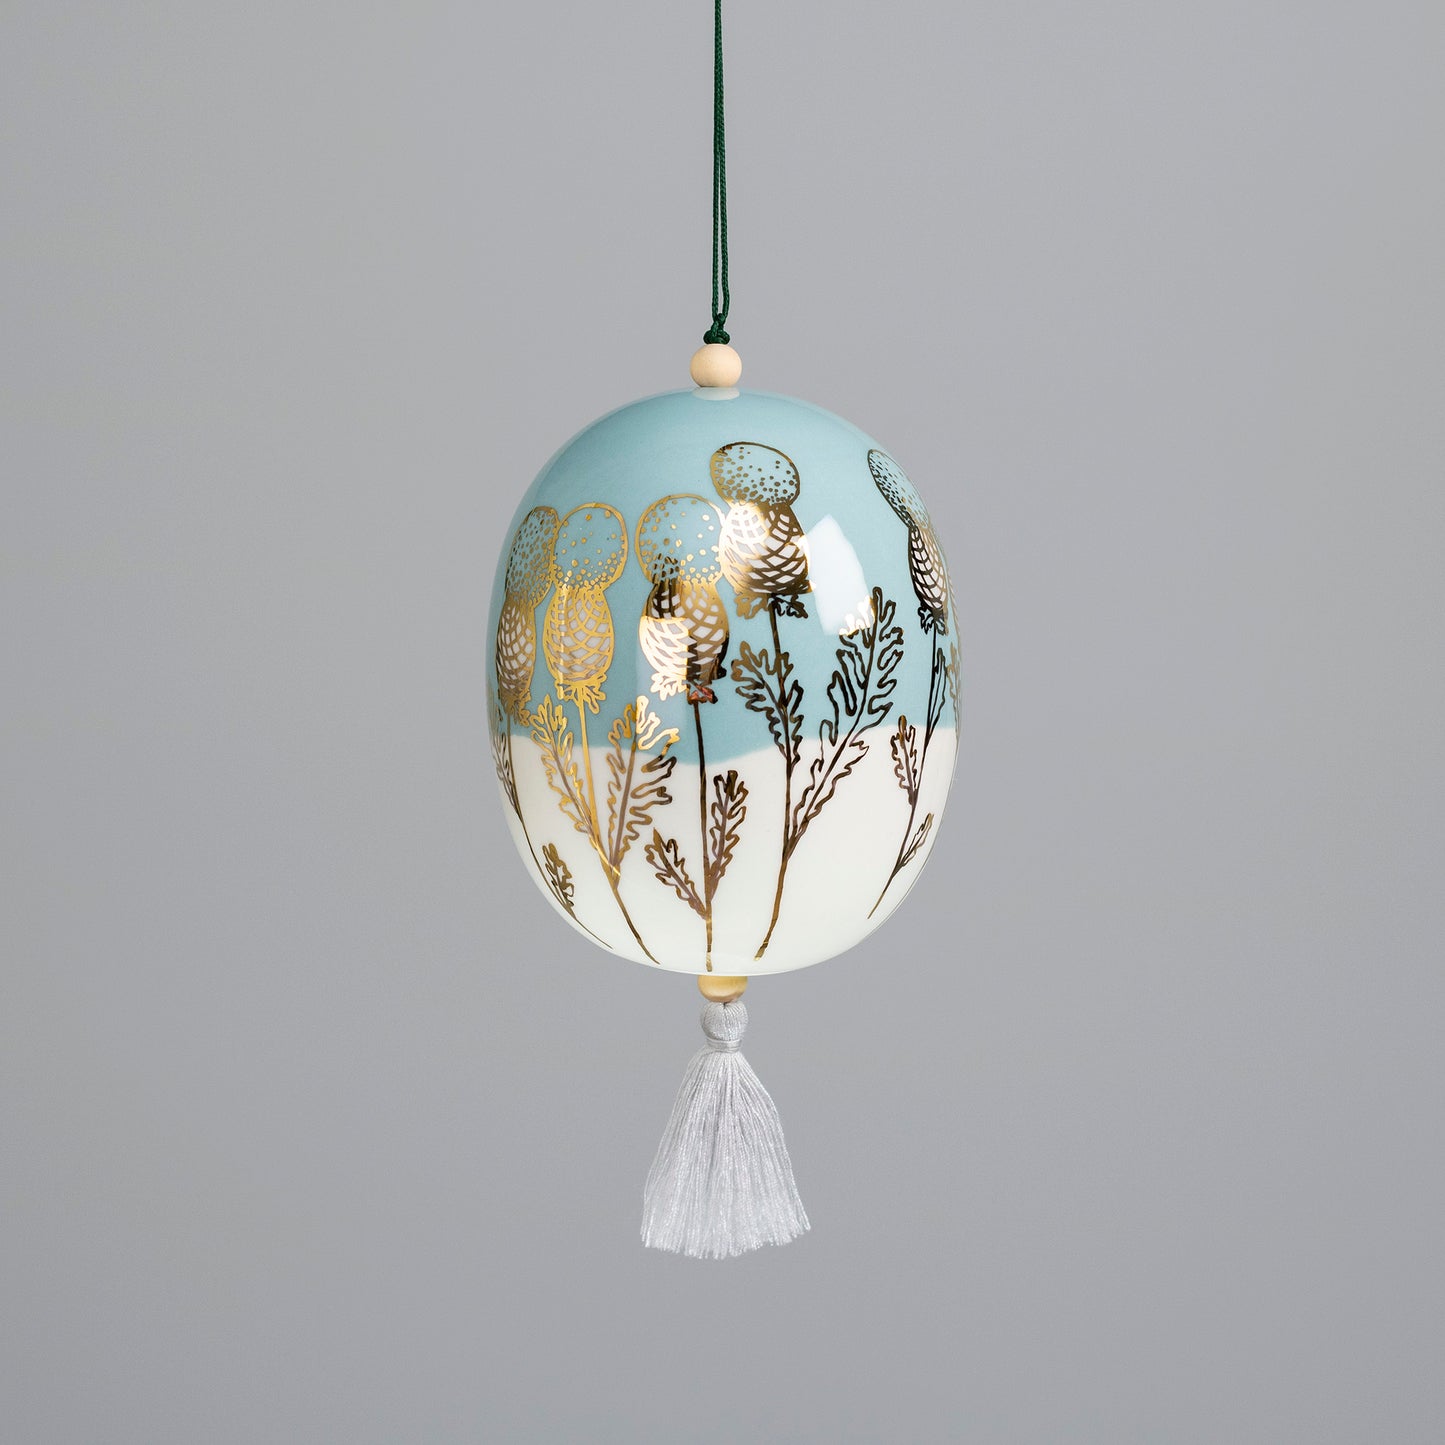 Painted Porcelain Globe